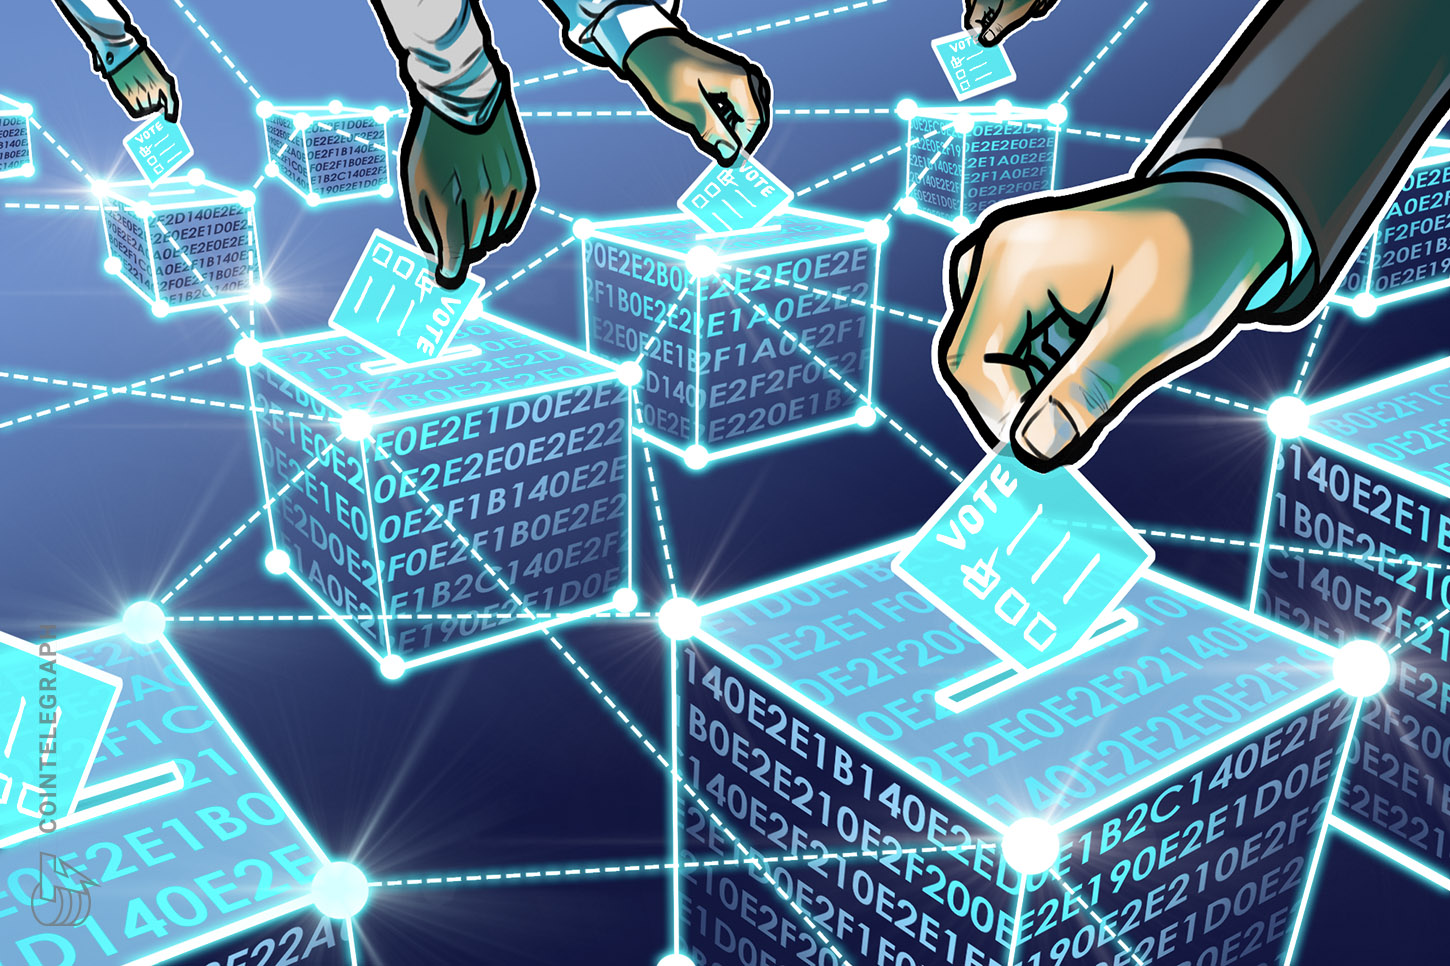 LayerX will develop blockchain-based voting system utilizing digital ID verification in Japan